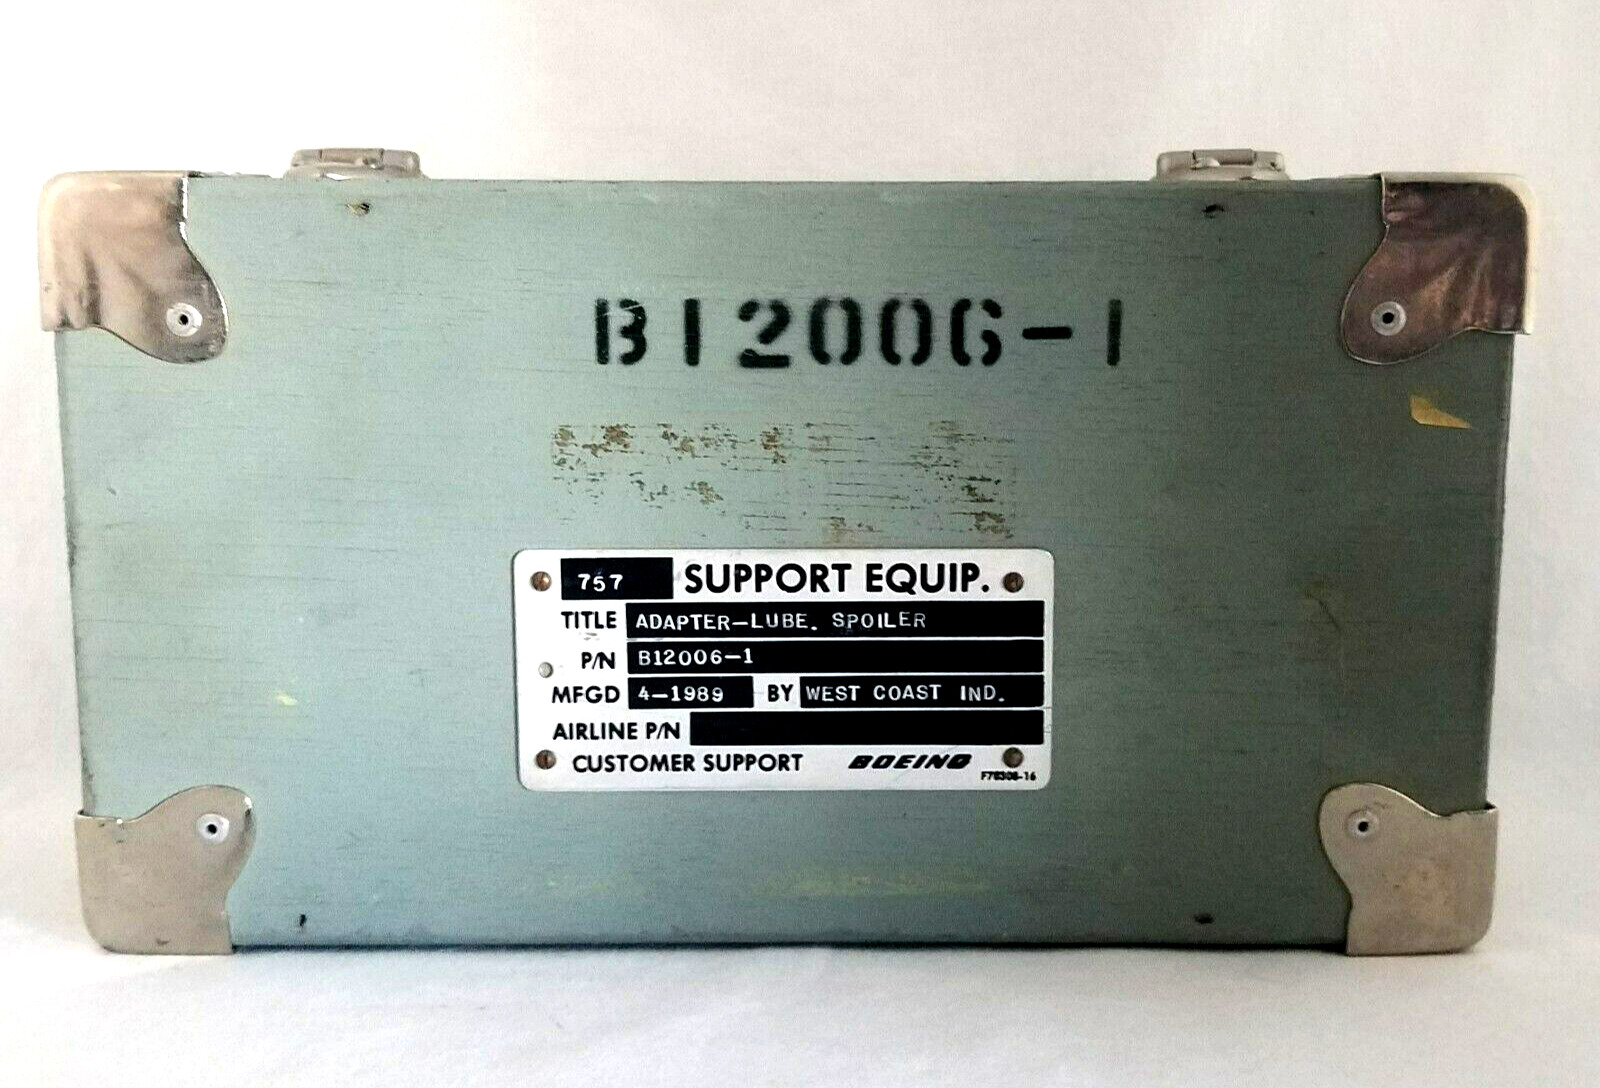 Vtg BOEING Wood Box 757 Airplane Support Equipment Adapter Lube Box - RARE - *